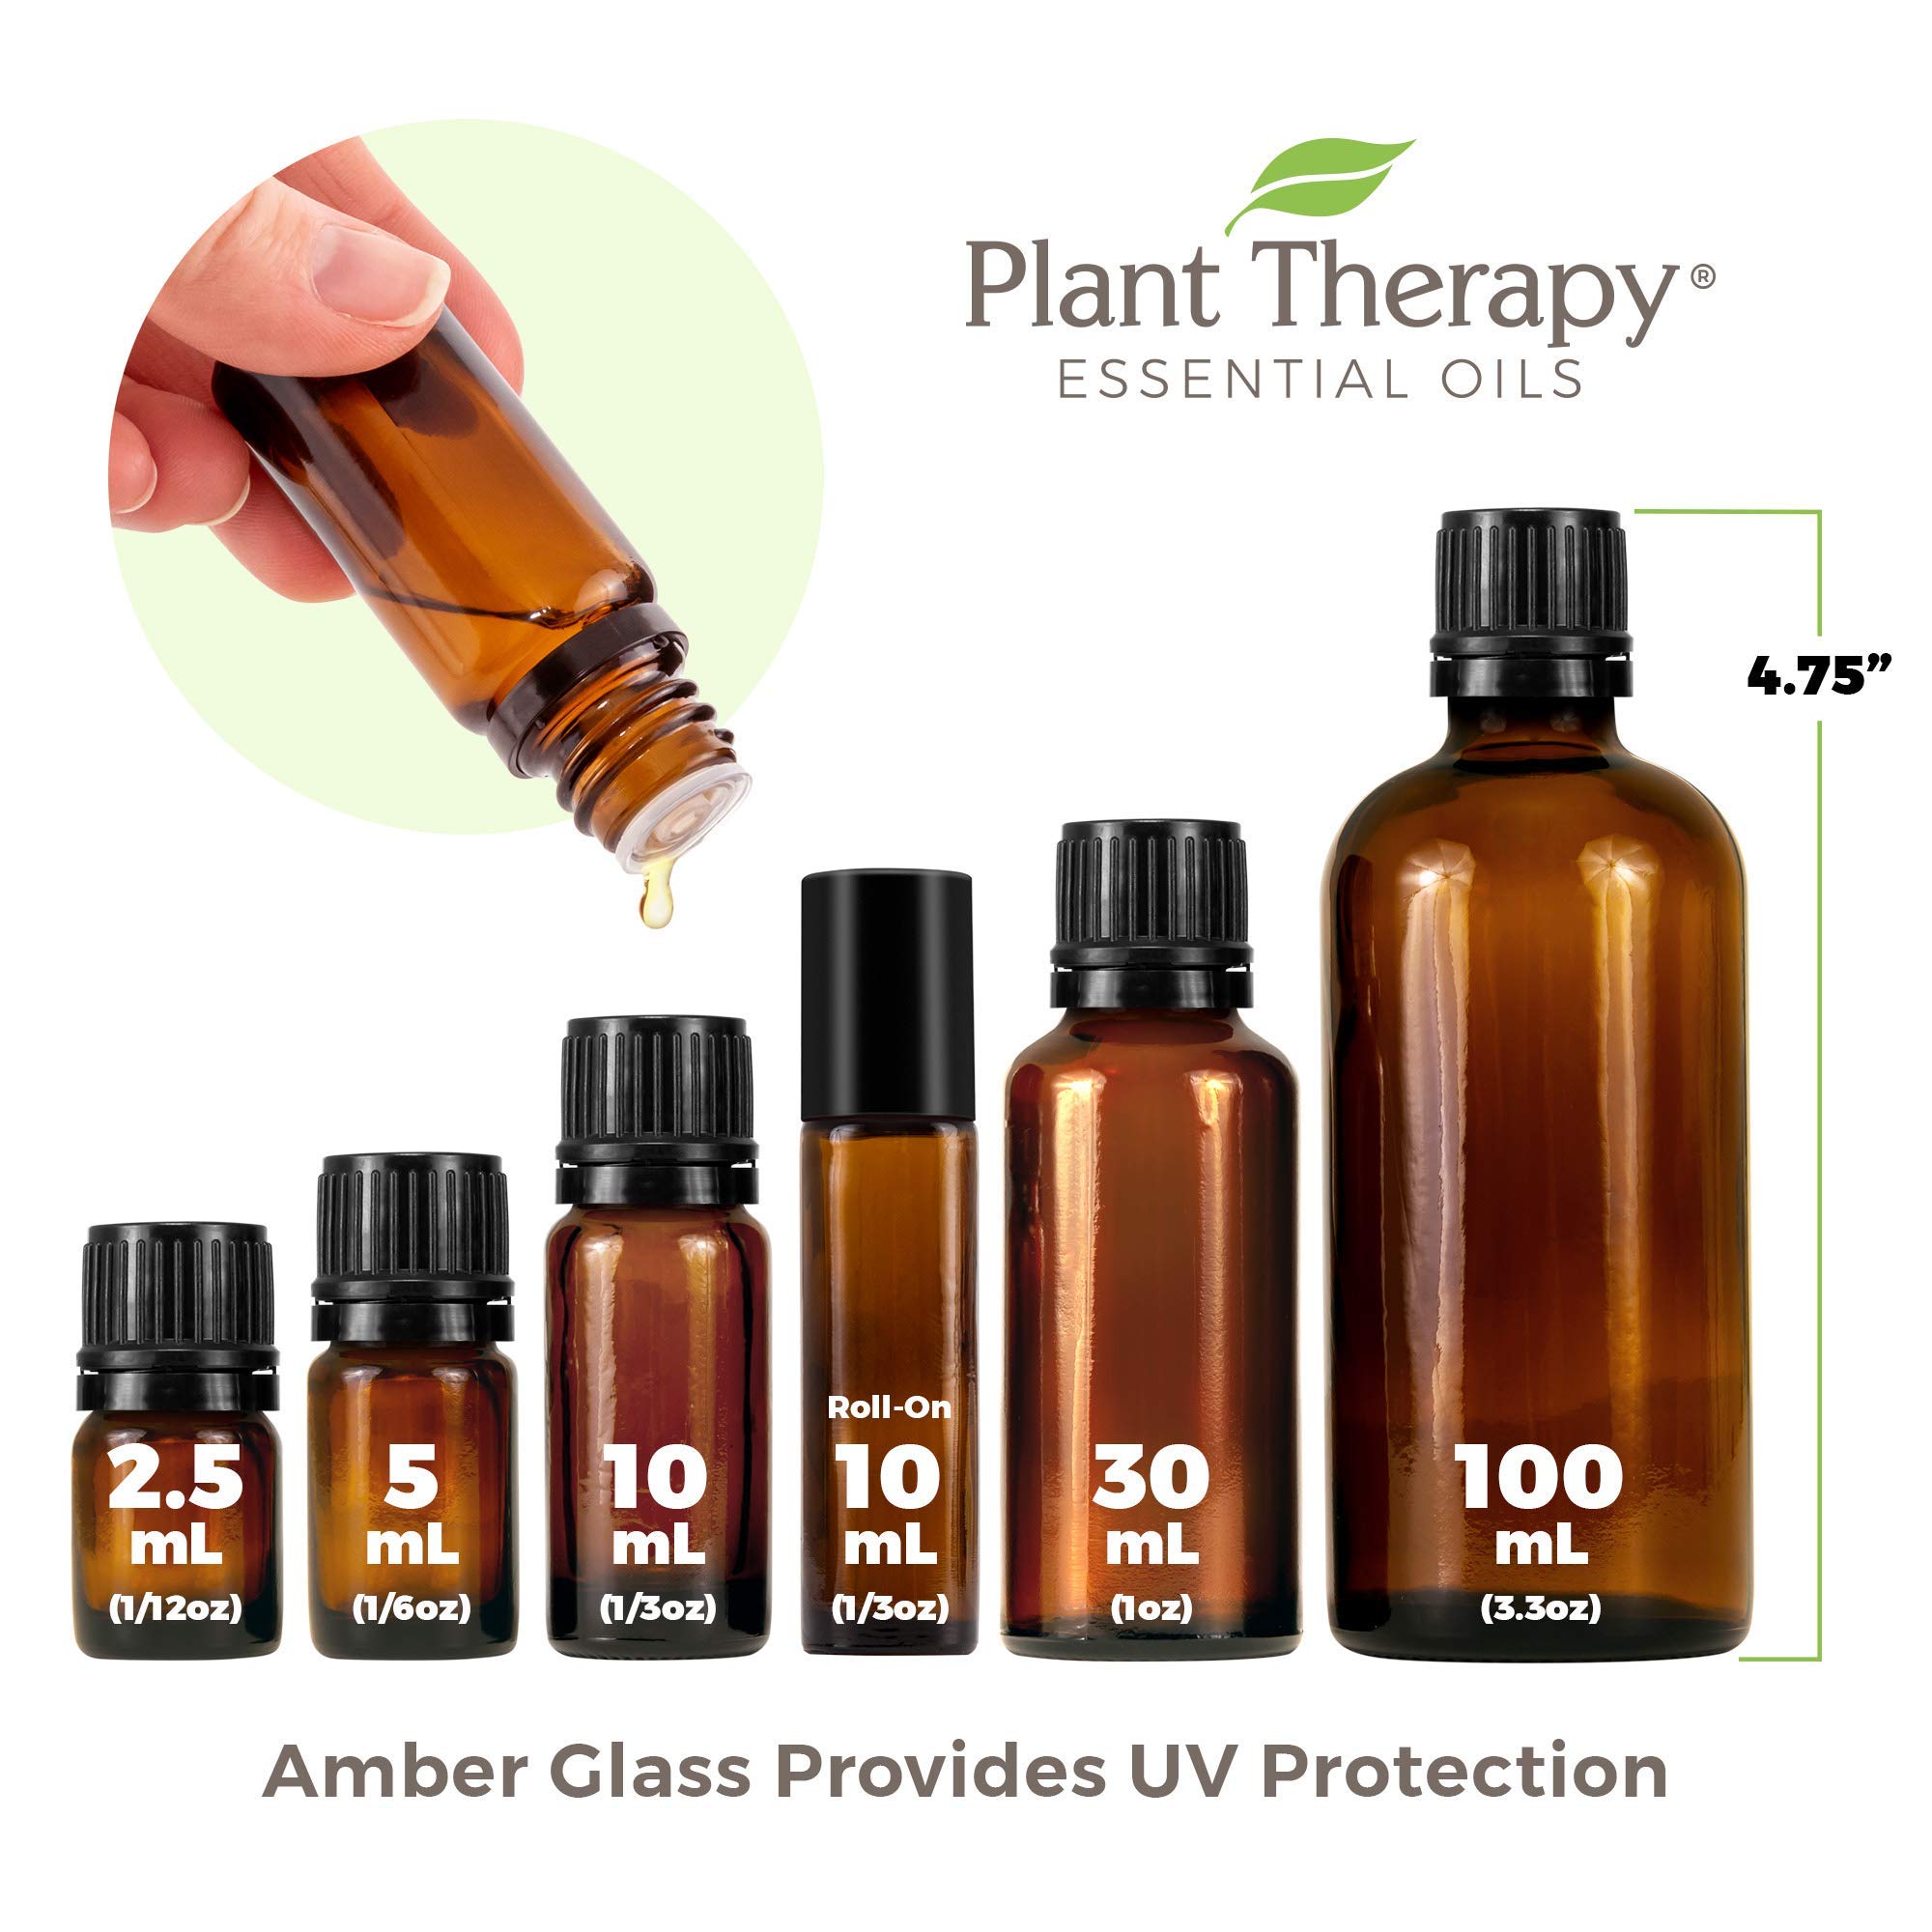 Plant Therapy Rose Otto Essential Oil 5 mL (1/6 oz) 100% Pure, Undiluted, Therapeutic Grade